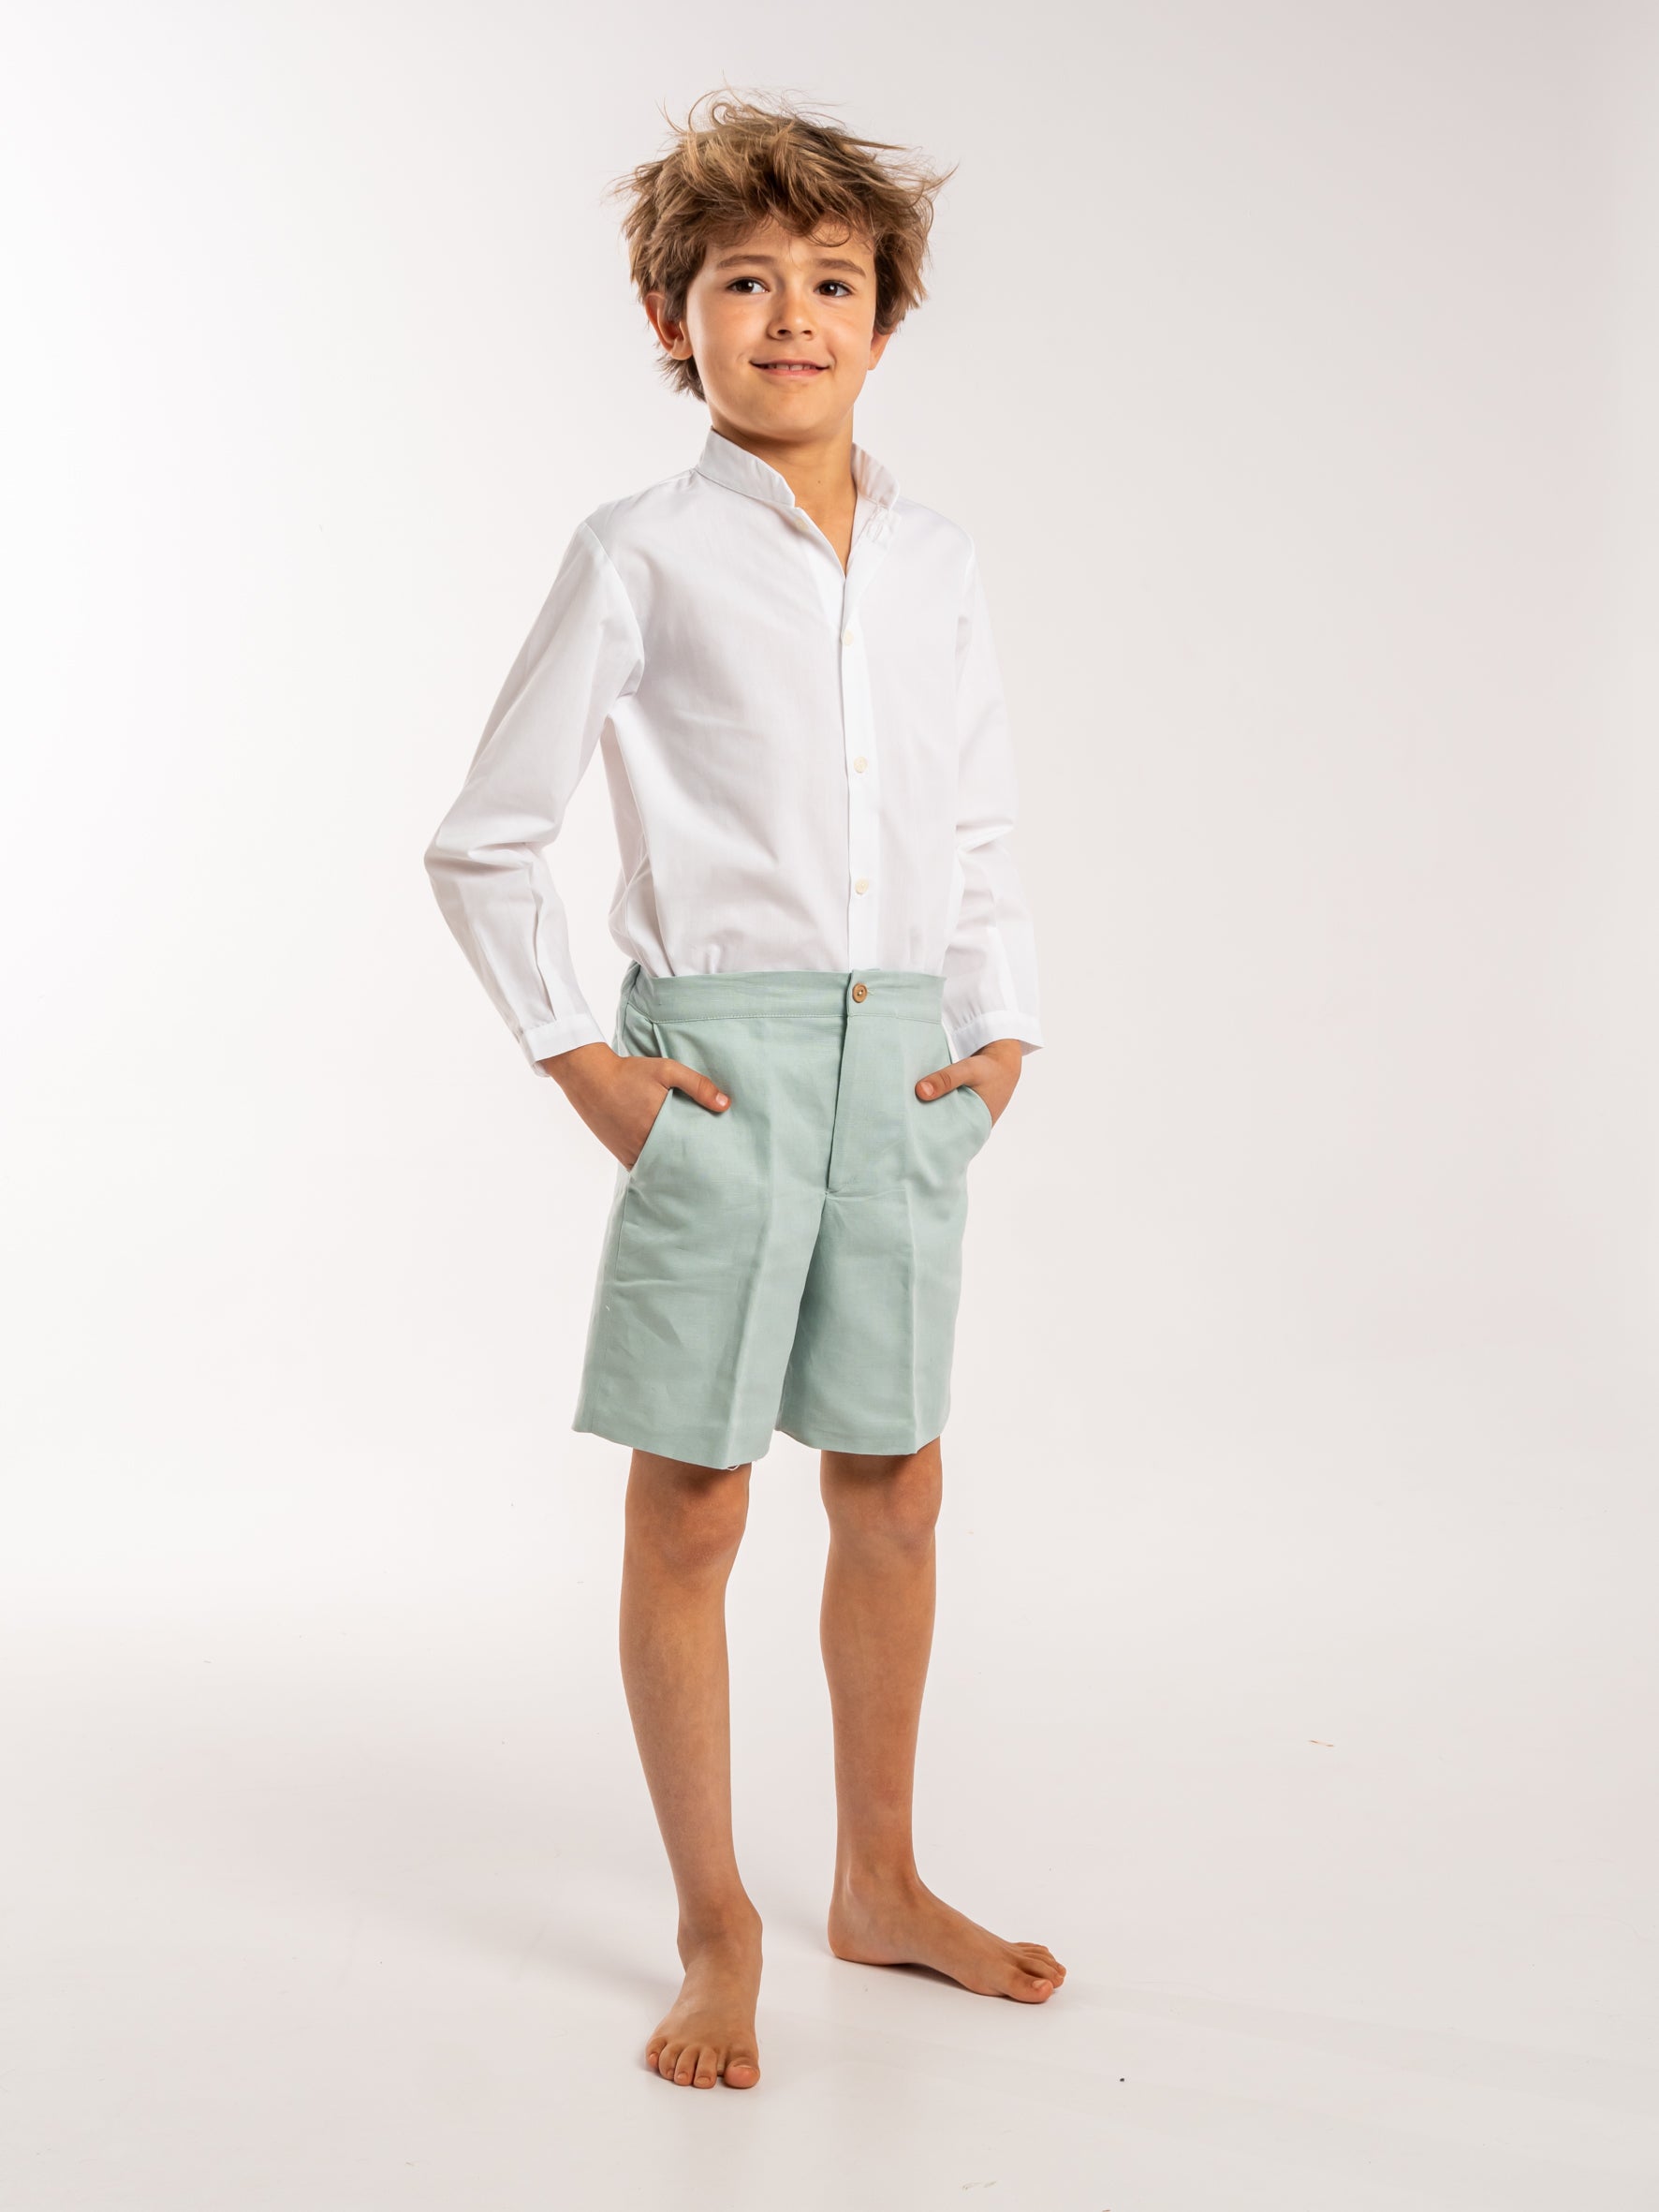 Pantalon corto pana verde agua - Numabela - Moda infantil